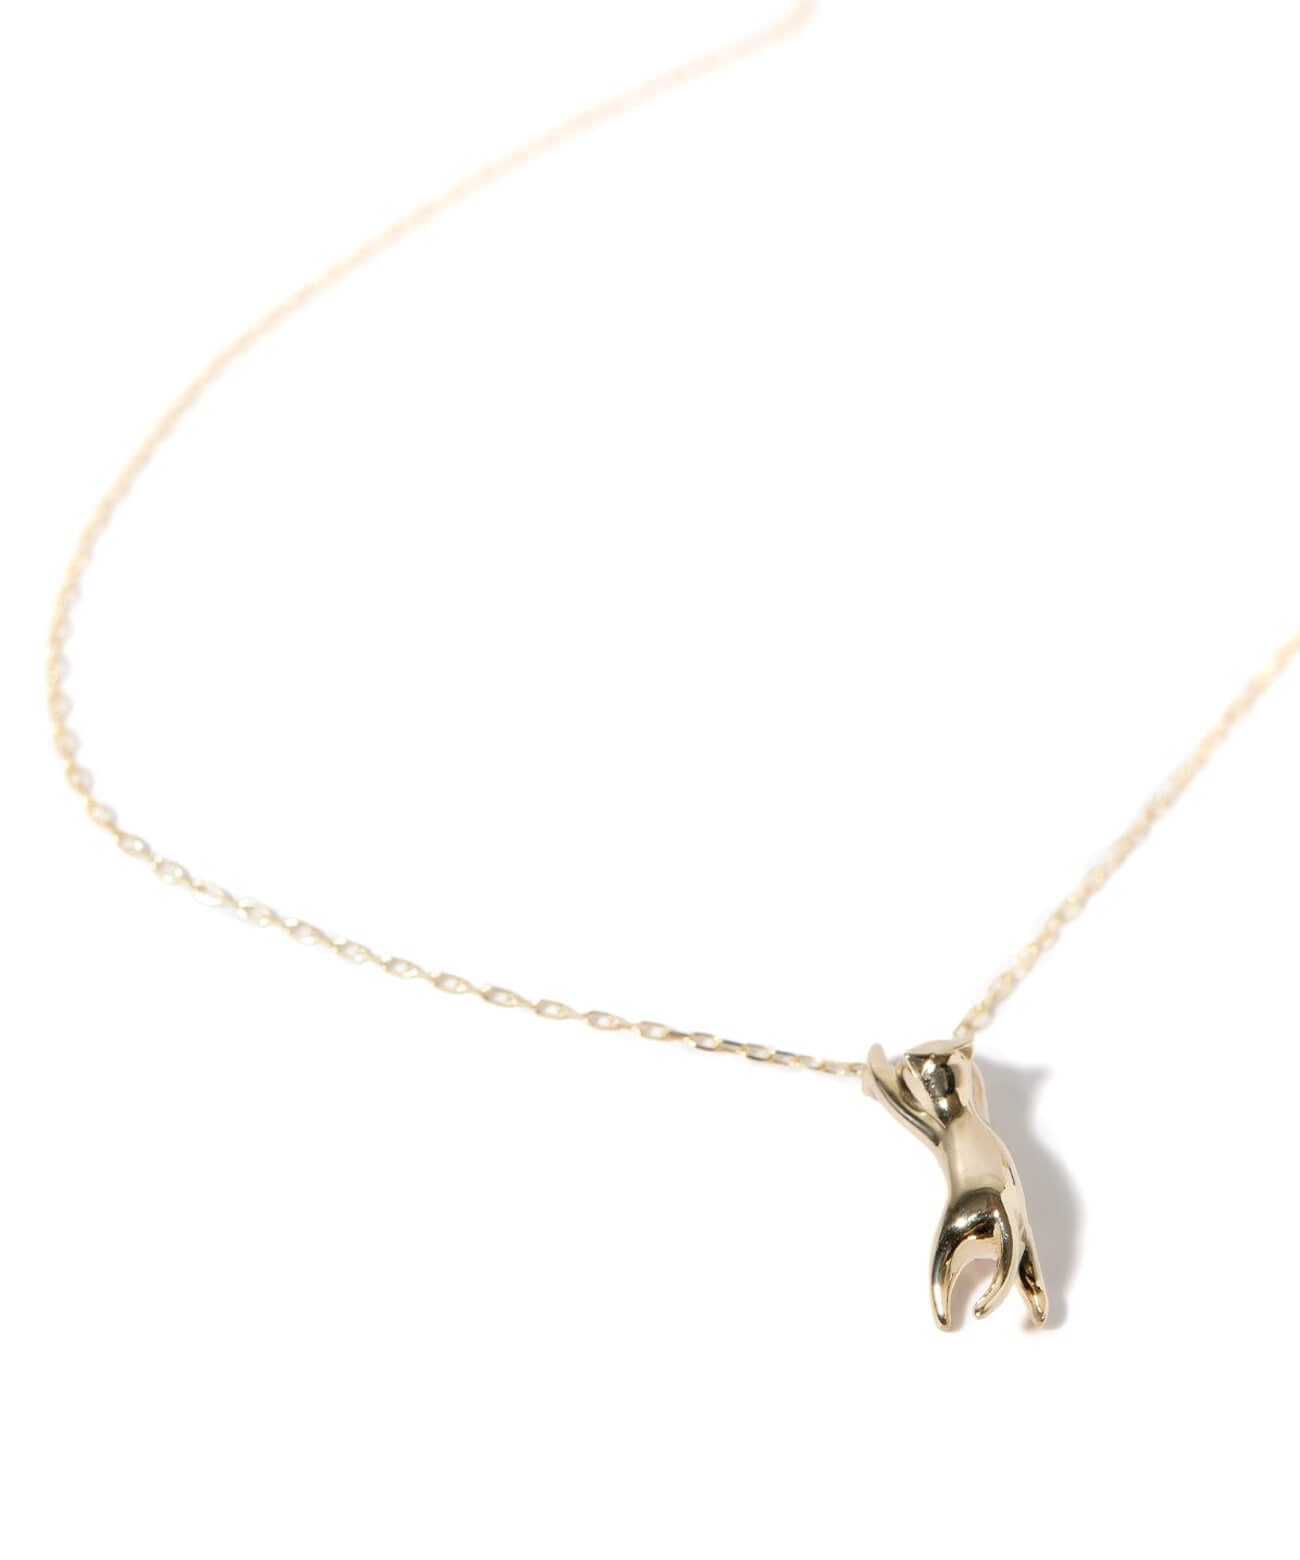 K10 Gold Cat Necklace  | ZOI-CAT NECKLACE